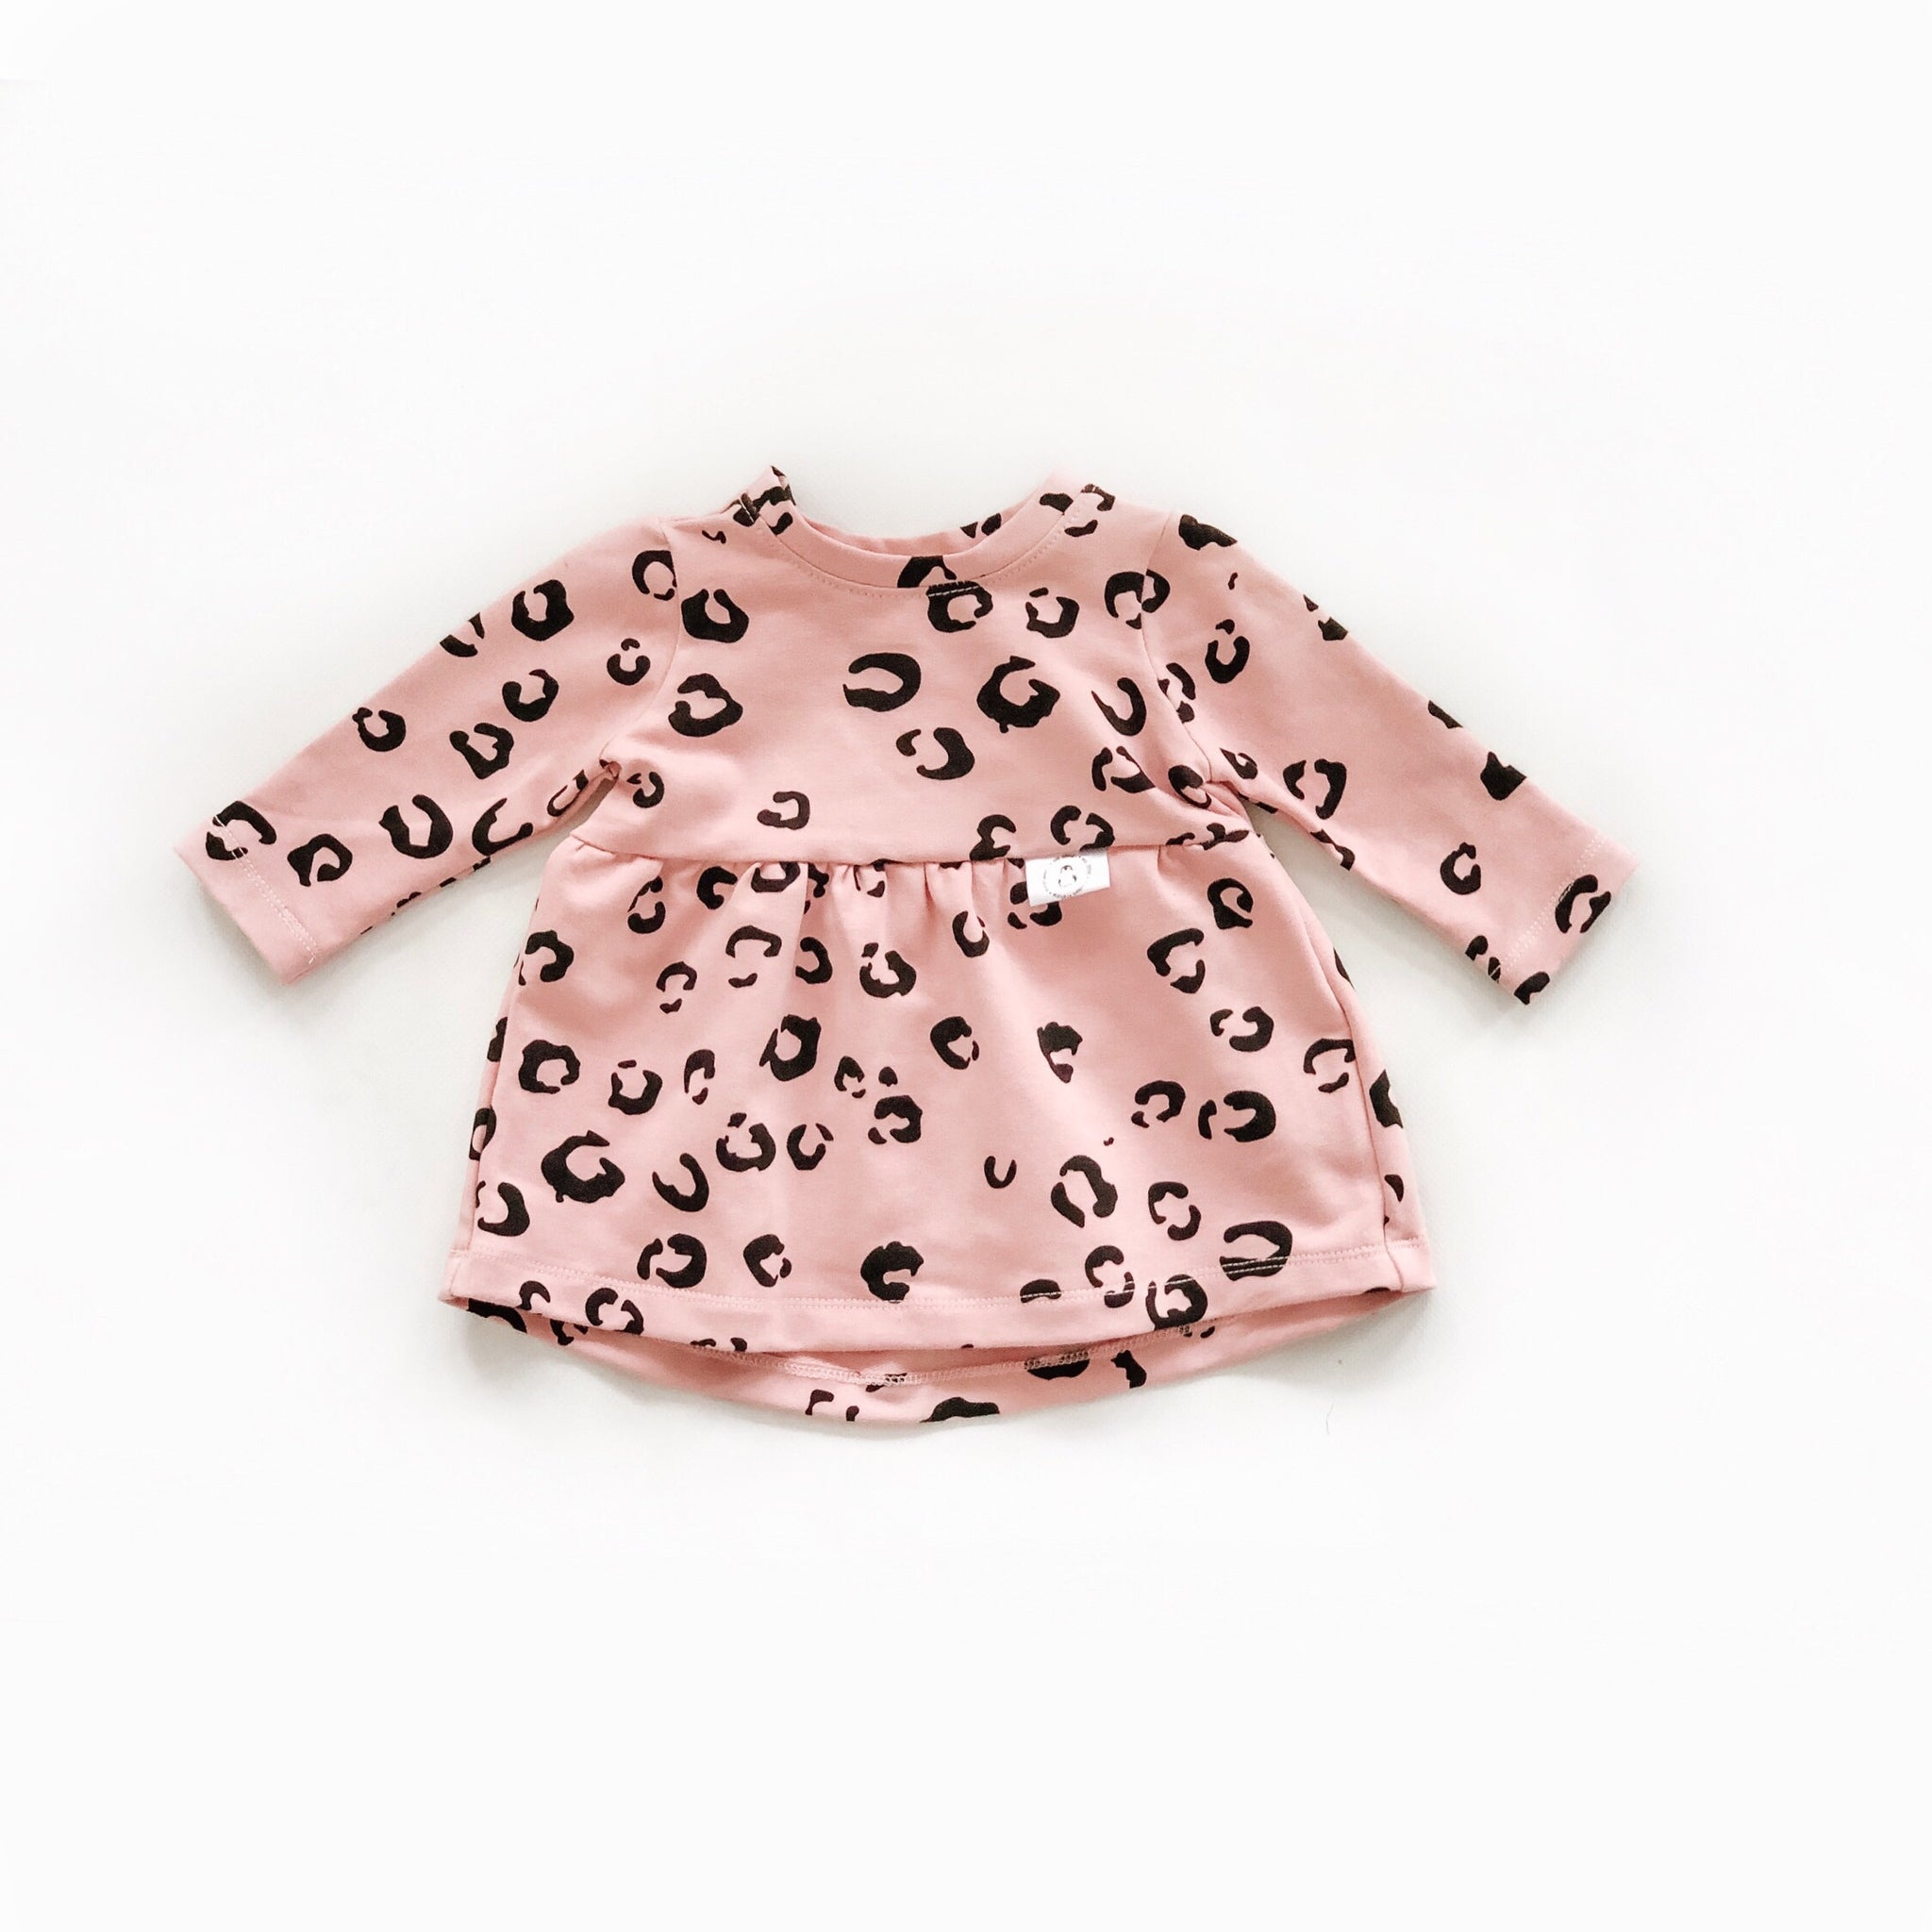 “Zoe” dress with Leopard print